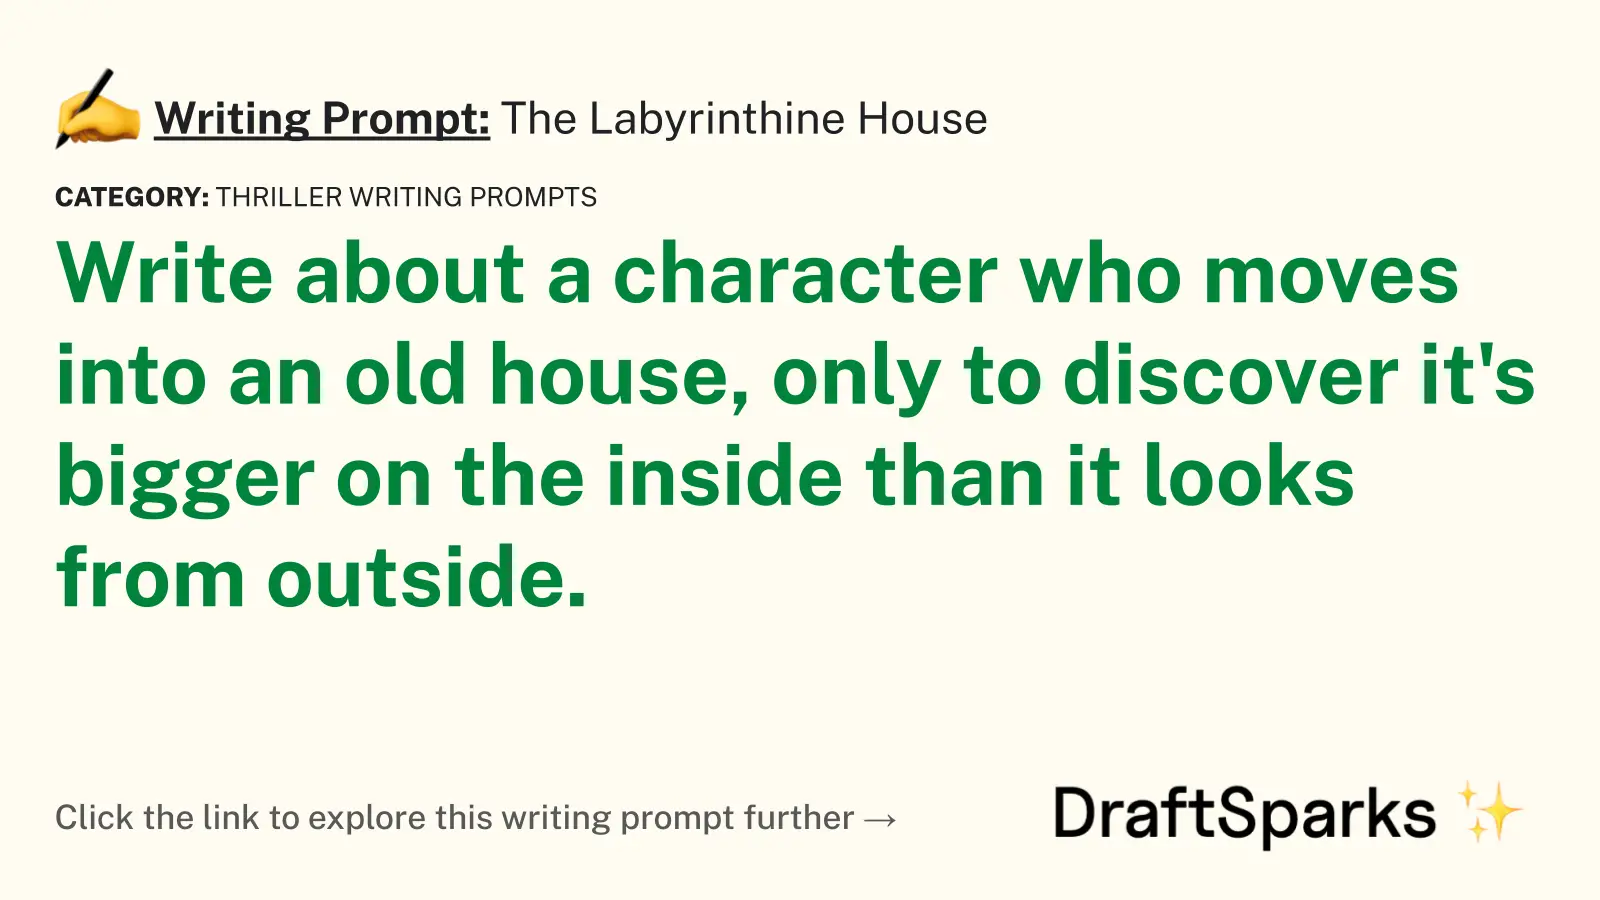 The Labyrinthine House